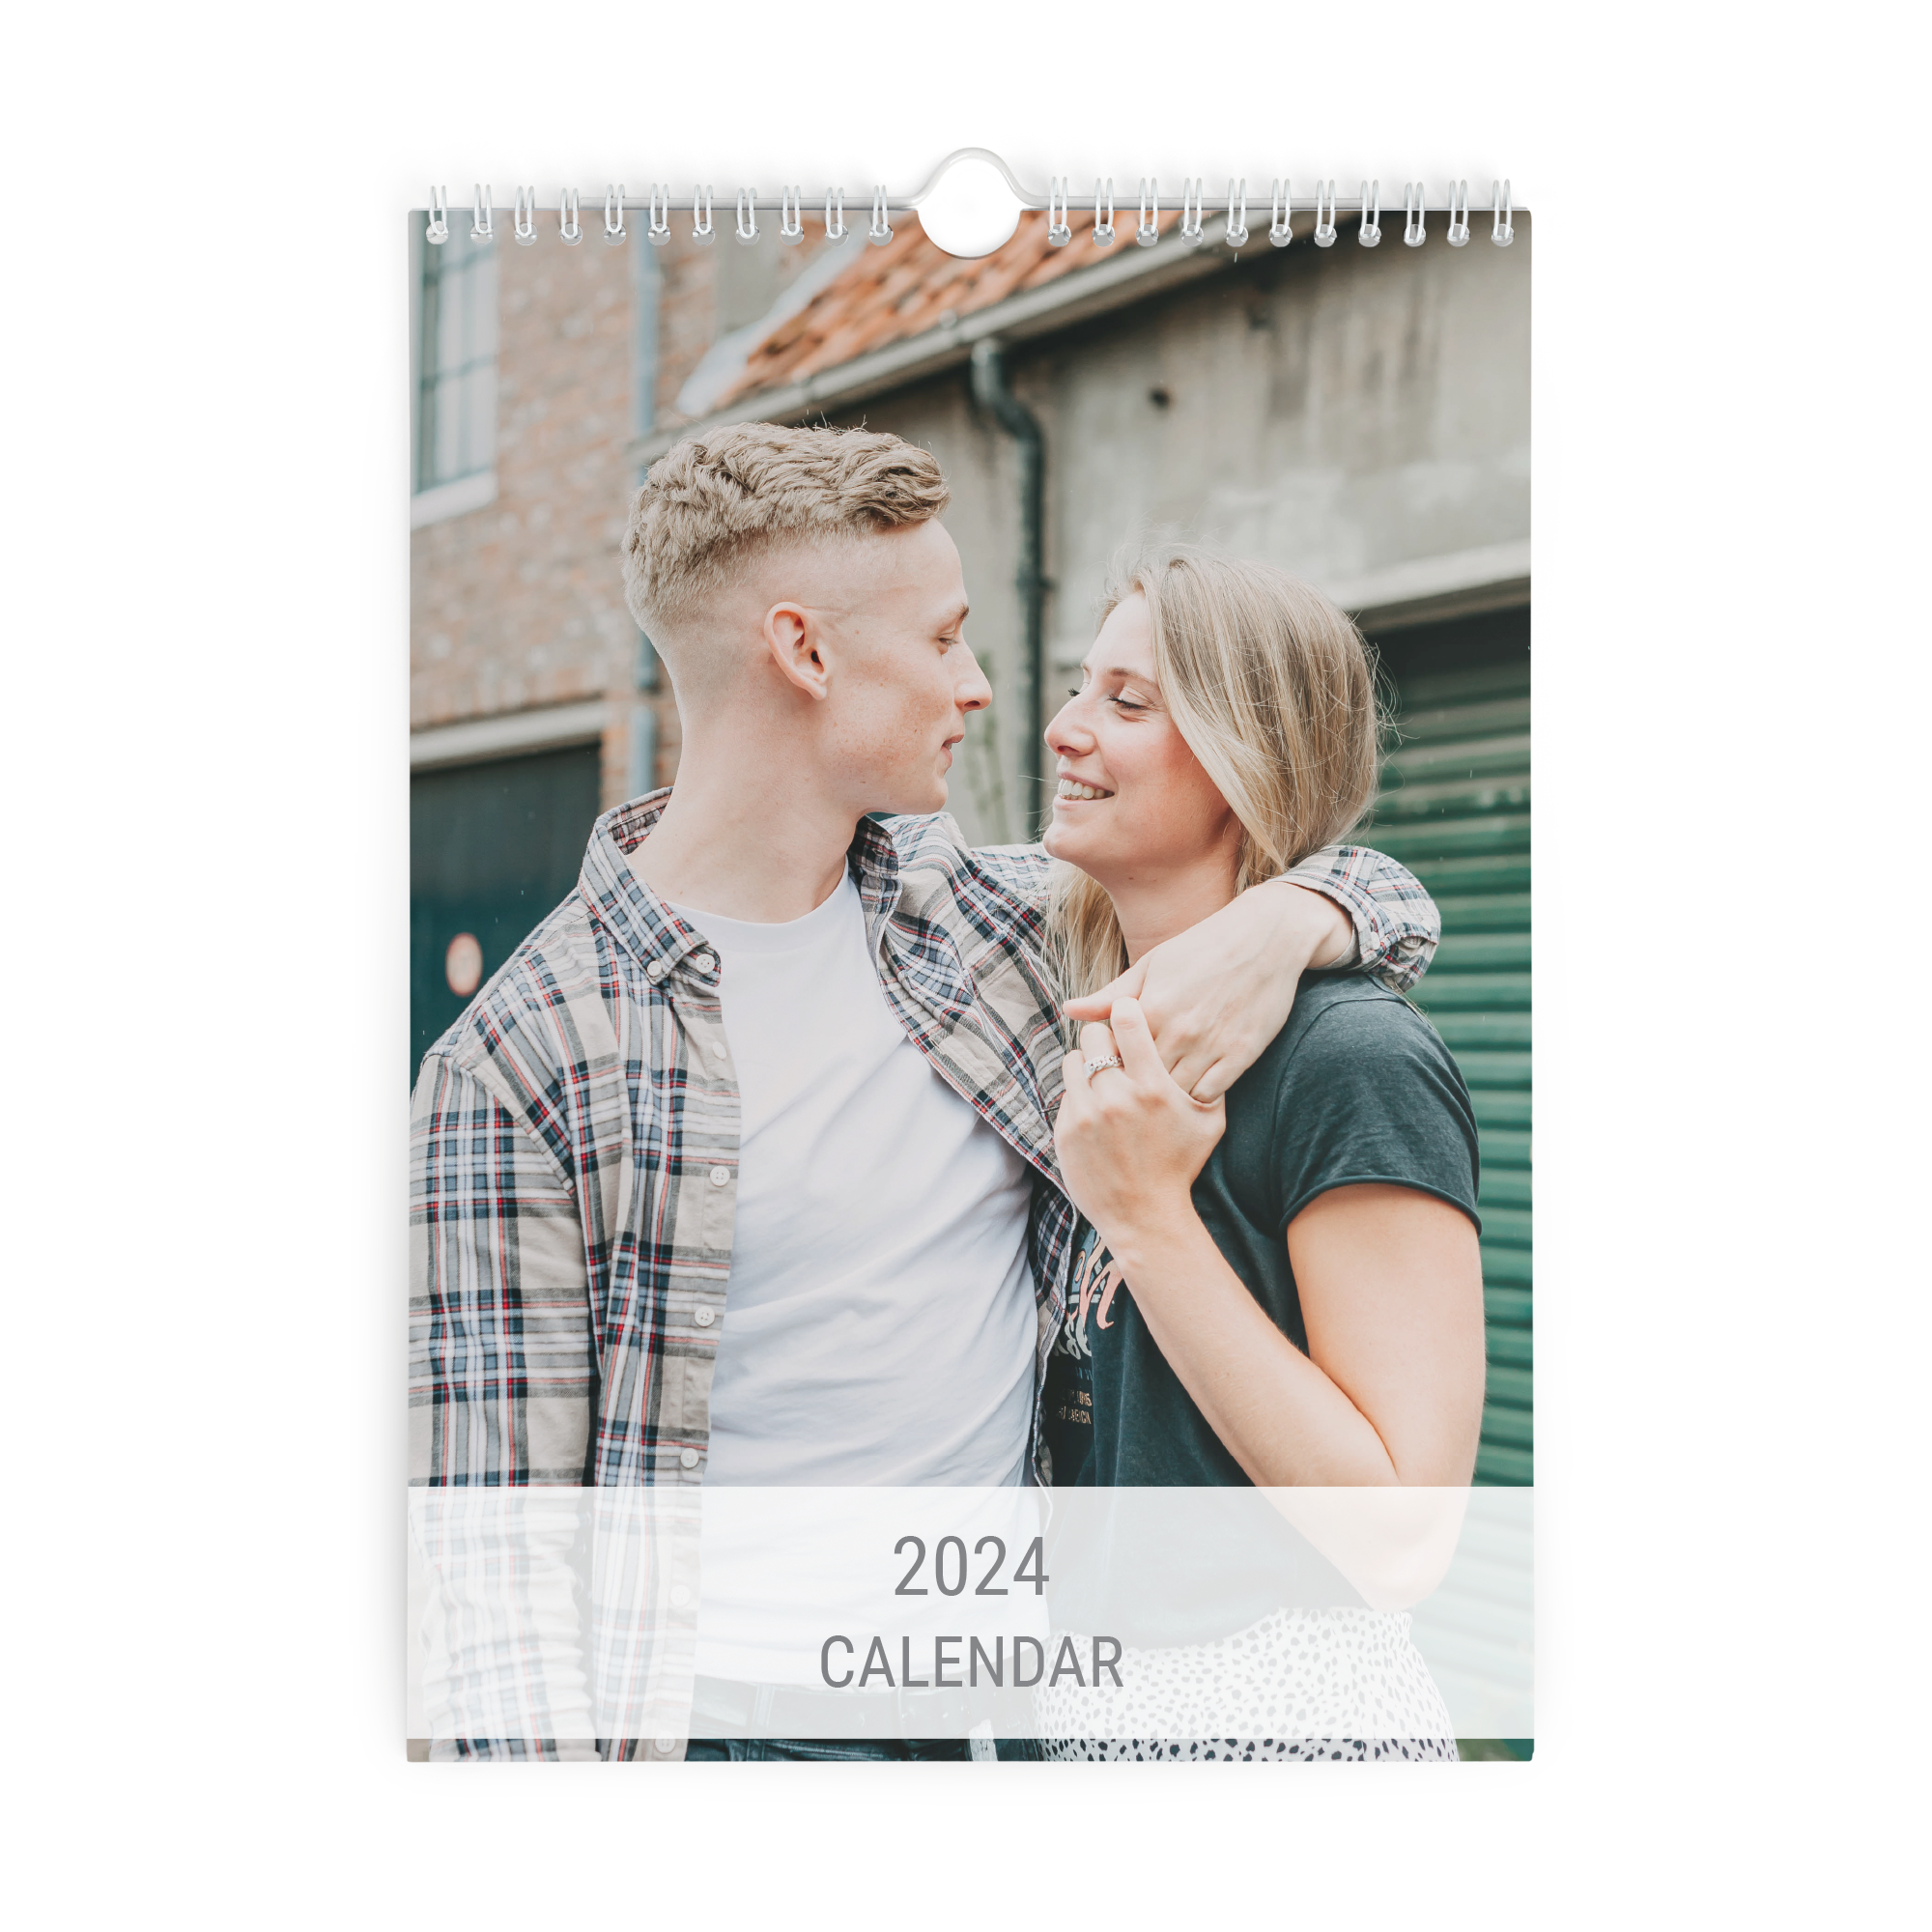 Printed Calendar for 2024 - Vertical 